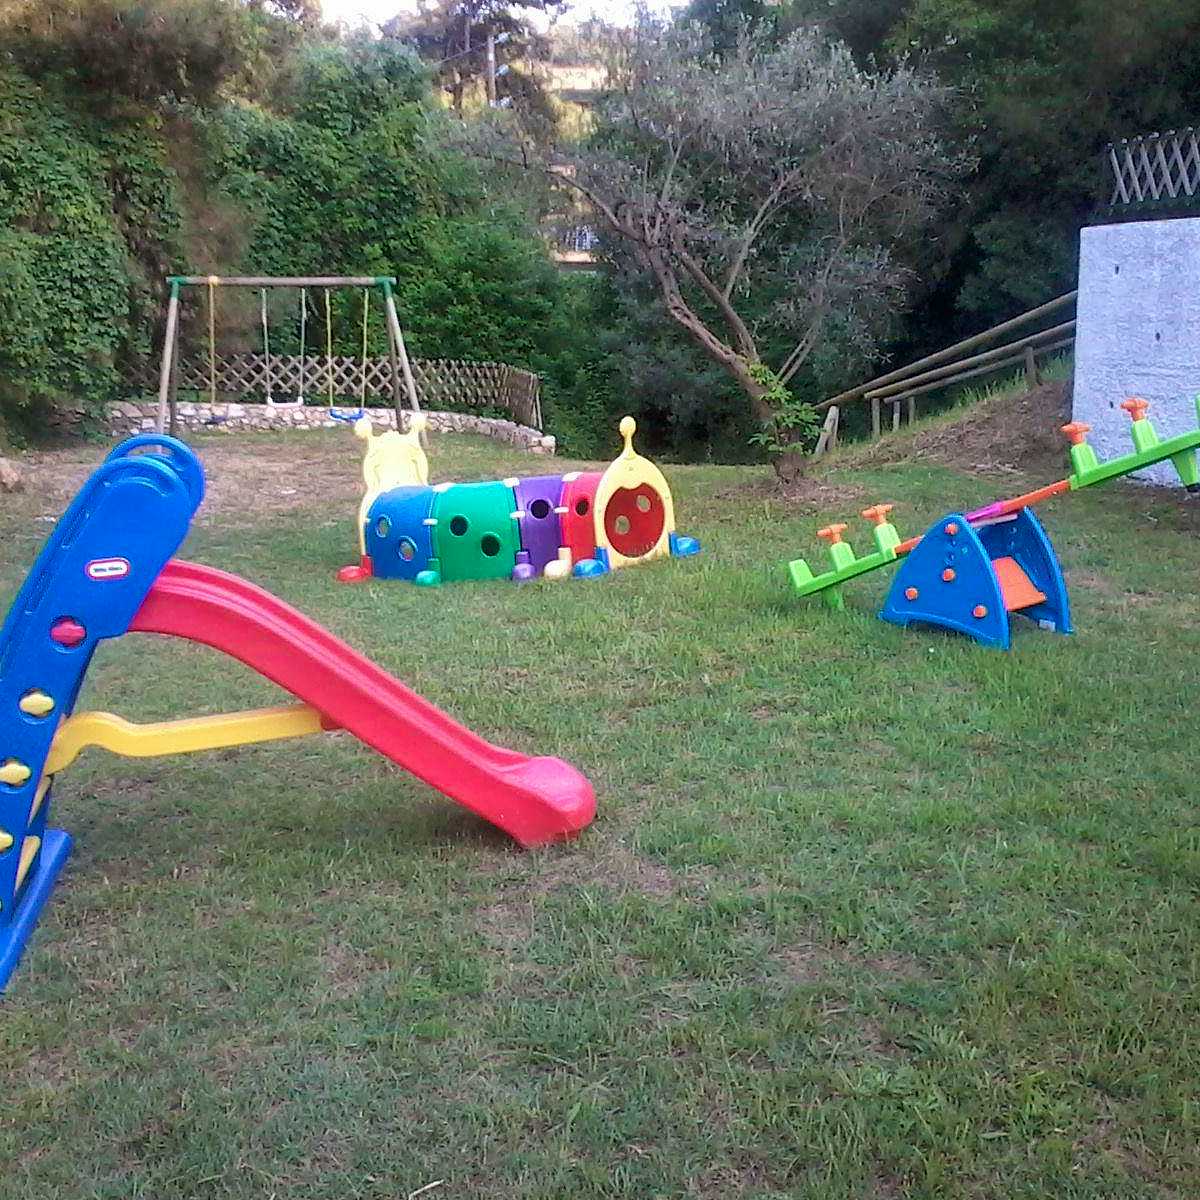 Photo Caption: Watch the children play safely in the garden's playground